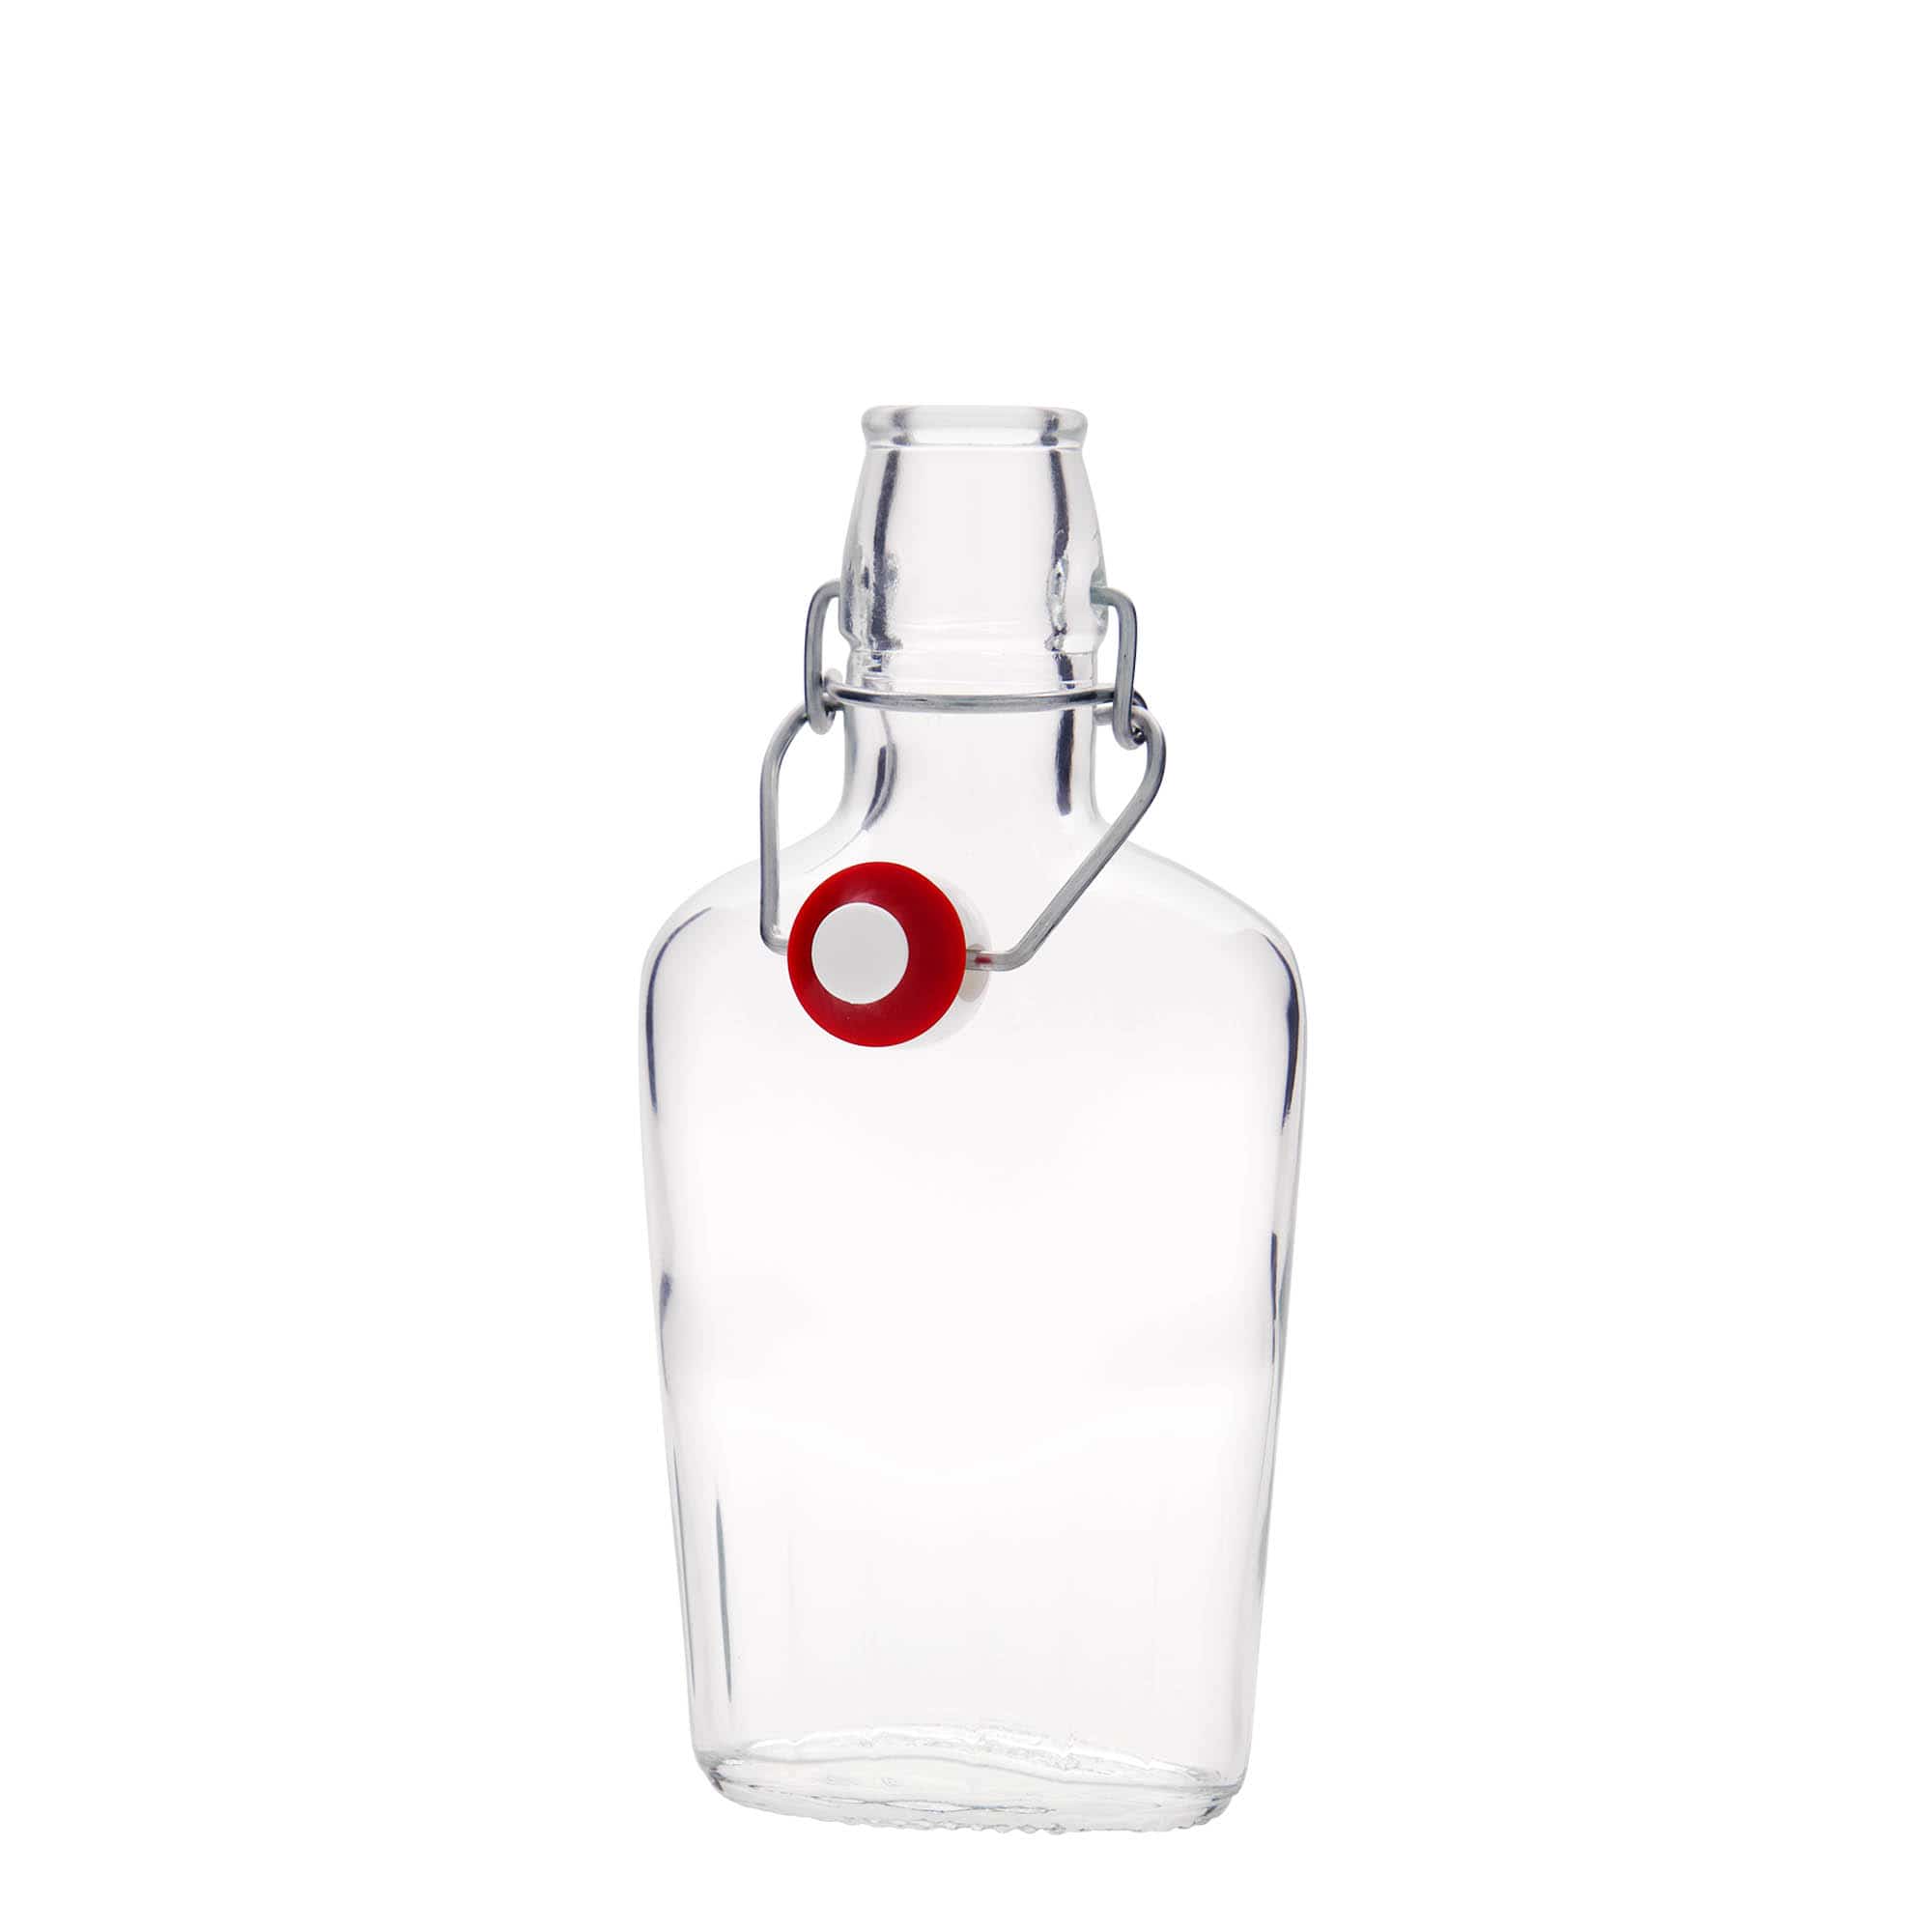 250 ml glass bottle 'Fiaschetta', oval, closure: swing top